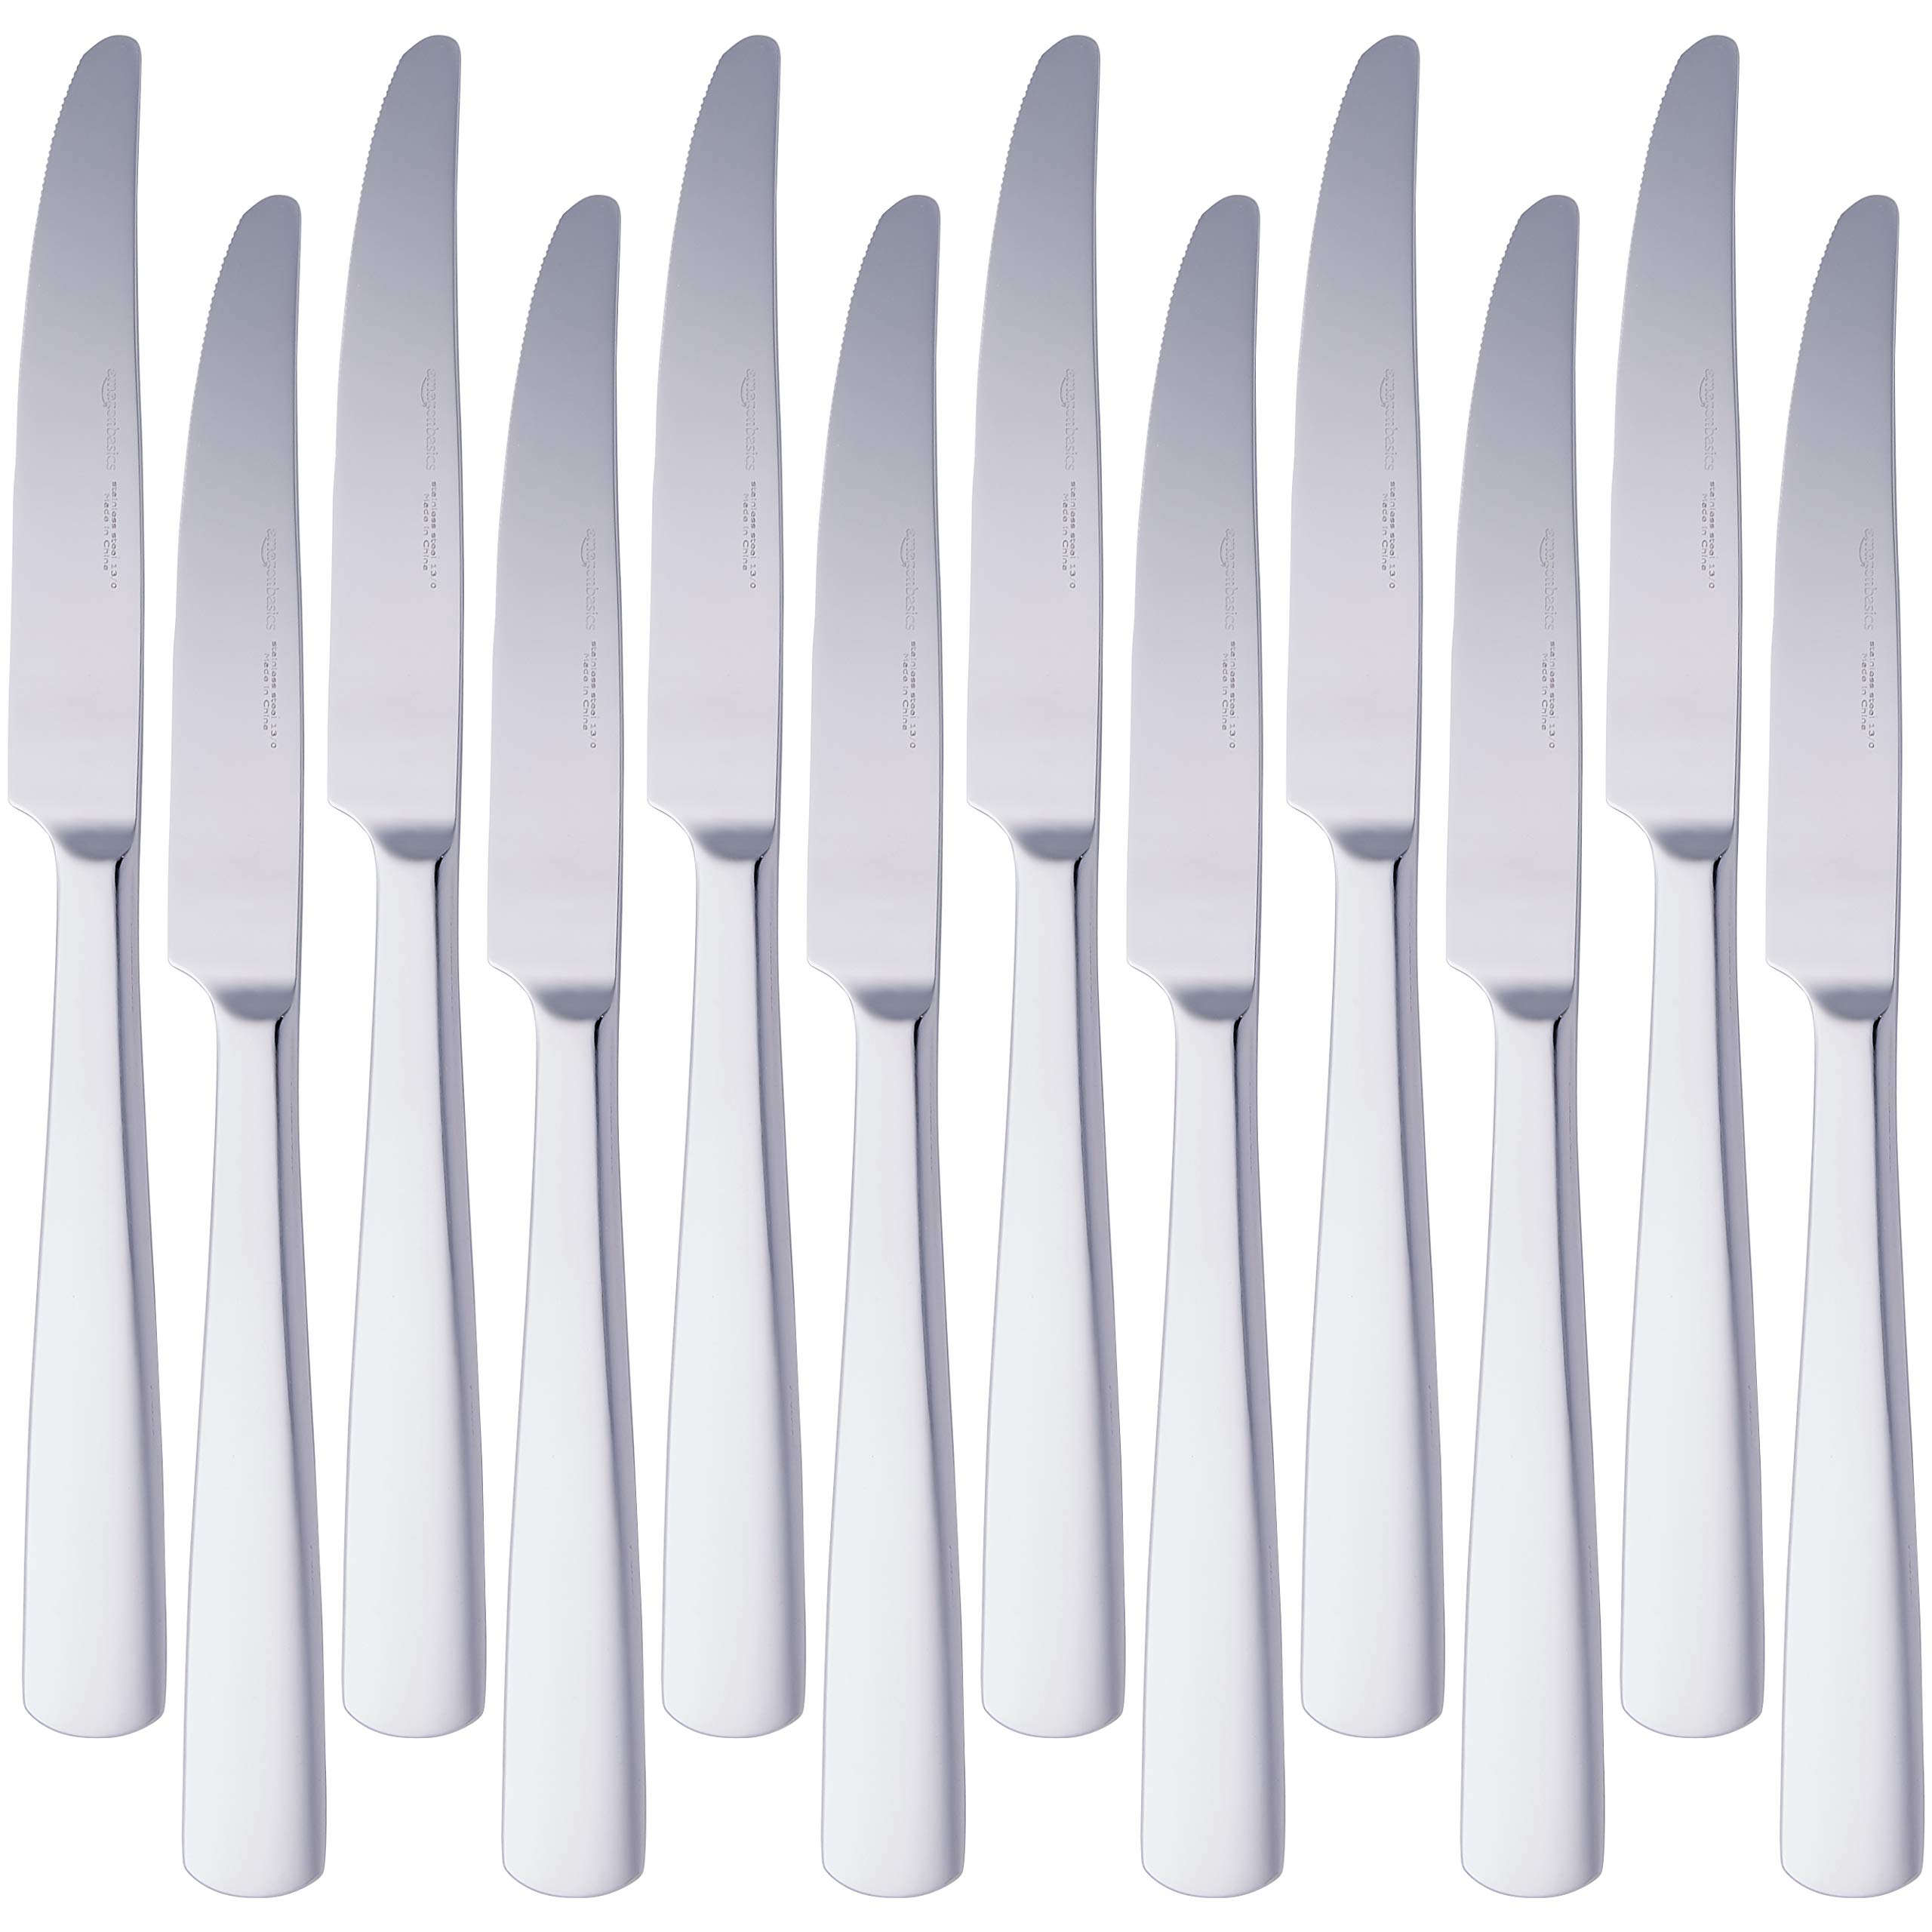 Abordable Amazon Basics Cuchillos de mesa de acero inoxidable con borde cuadrado, 12 pièces, Argenté, 25,4 x 14,22 x 1,52 cm qpM4rAsaT grand